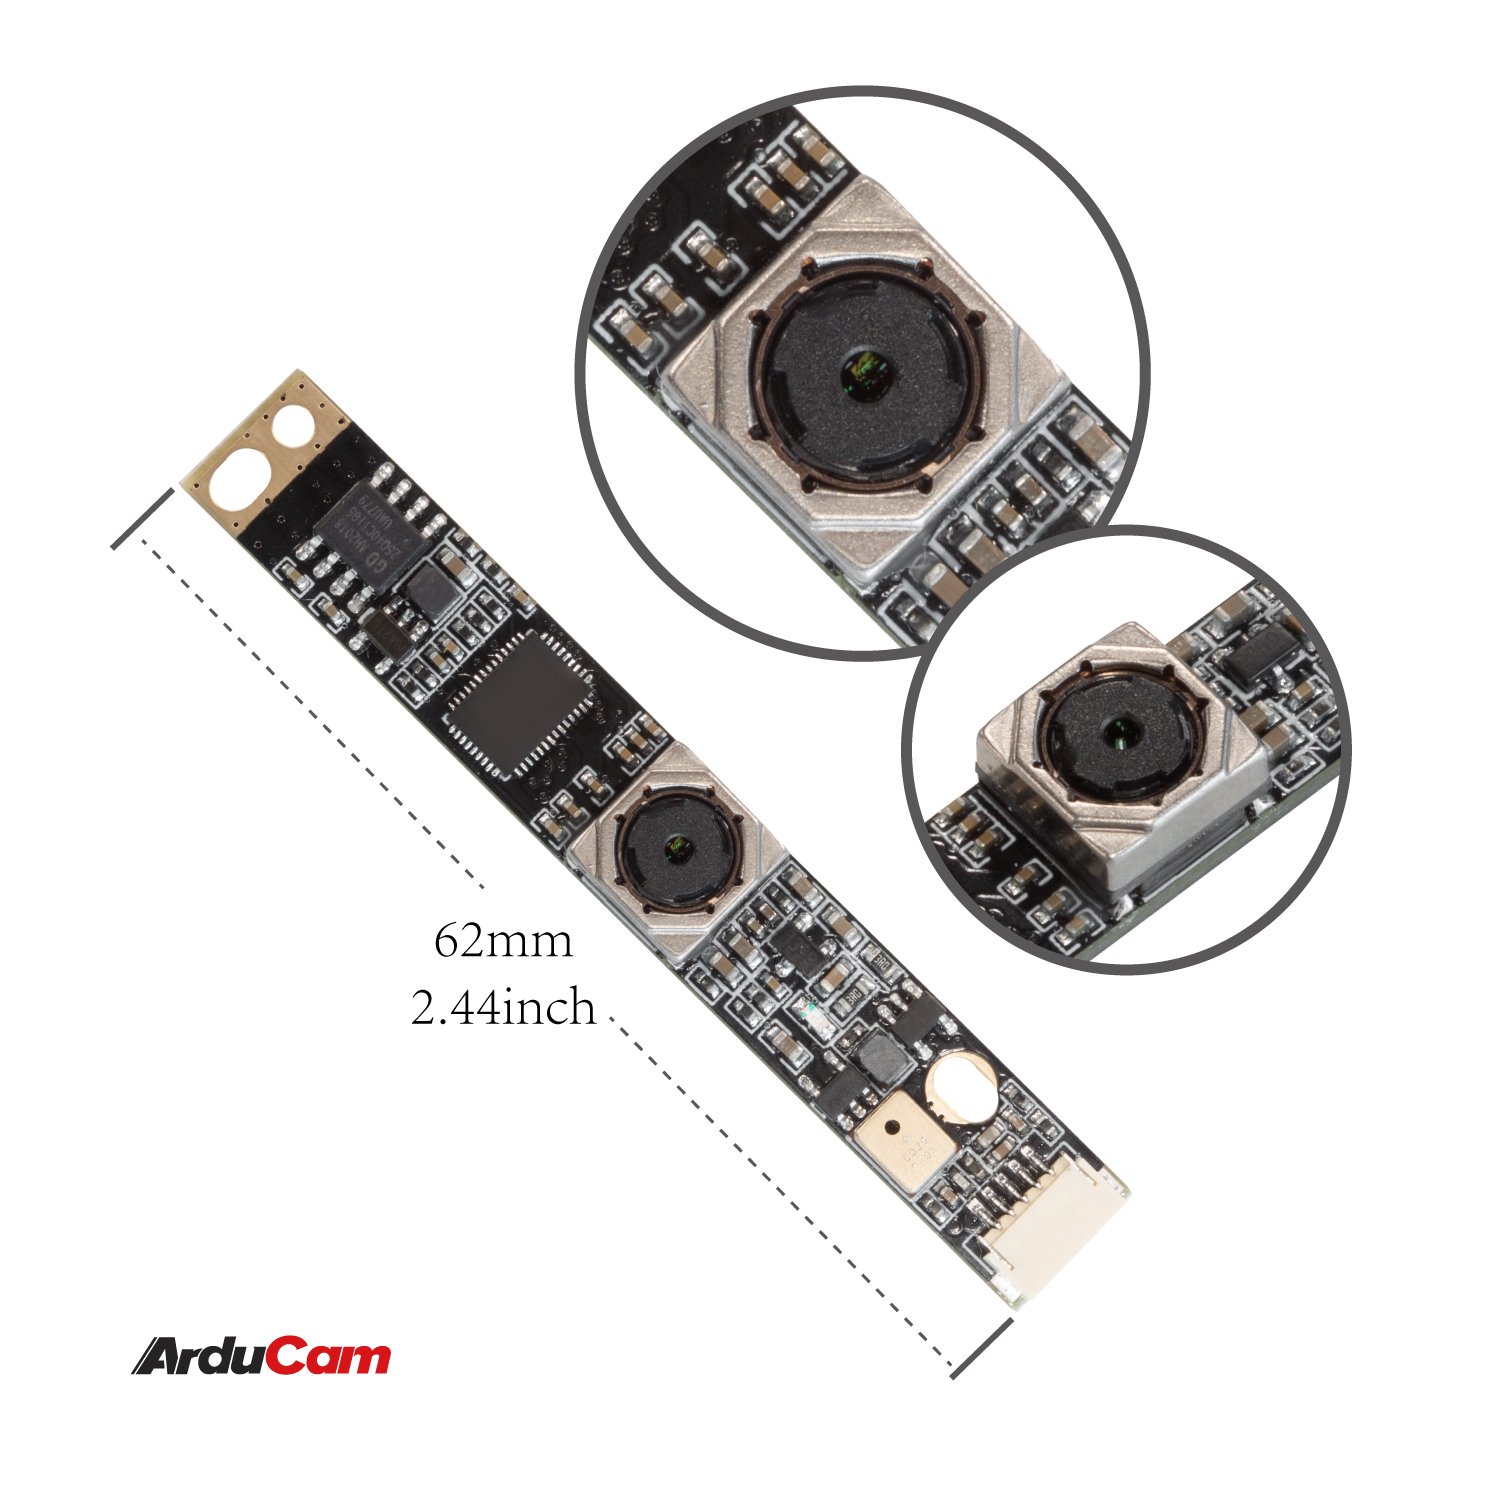 USB Webcam Camera Modules - Arducam